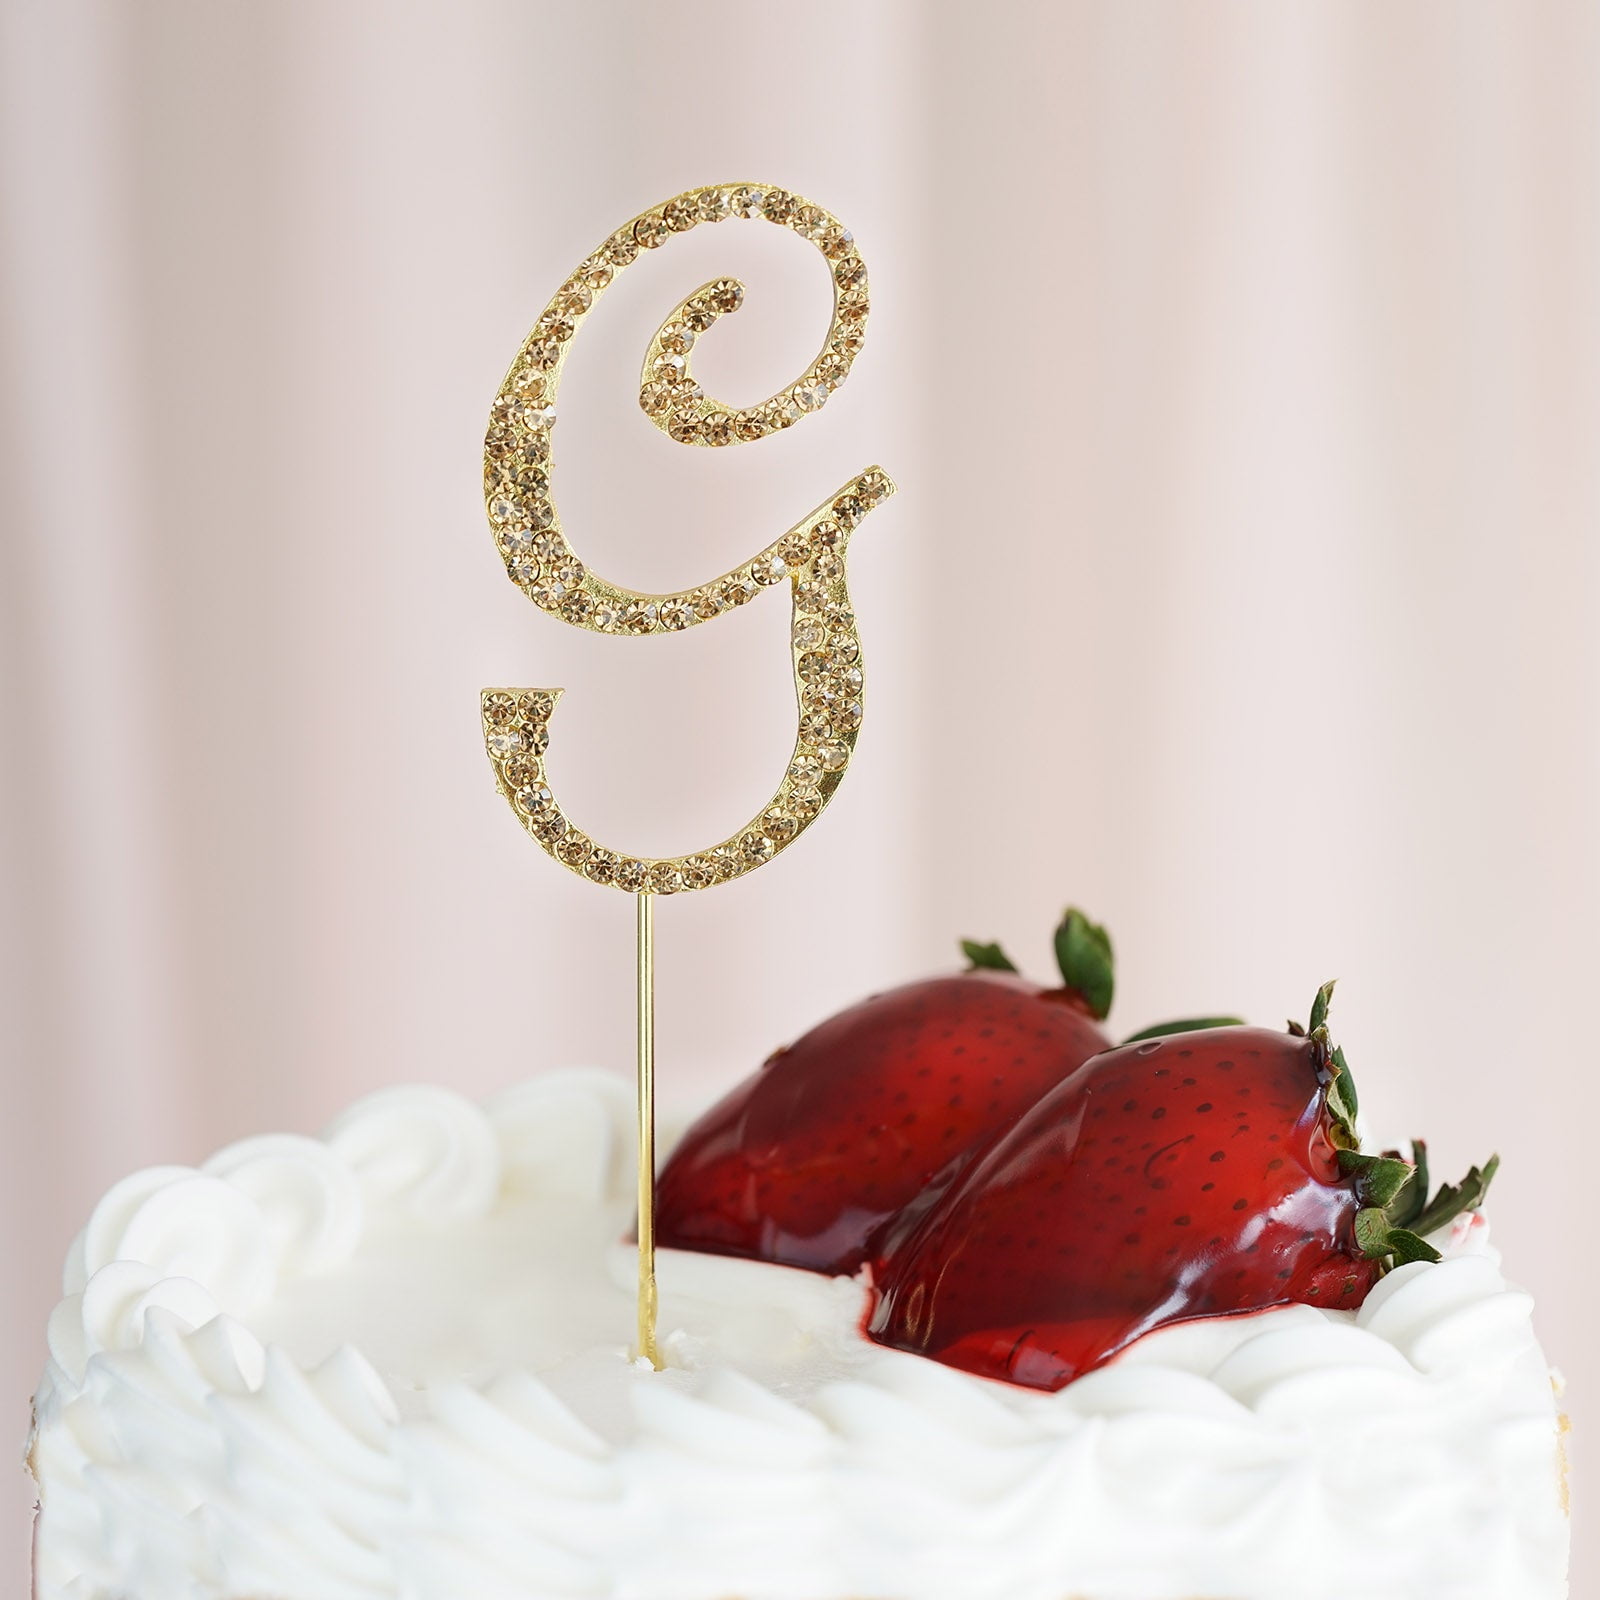 GOLD Plated Rhinestone  Monogram Letter “F”  Wedding Cake Topper  5" inch high 